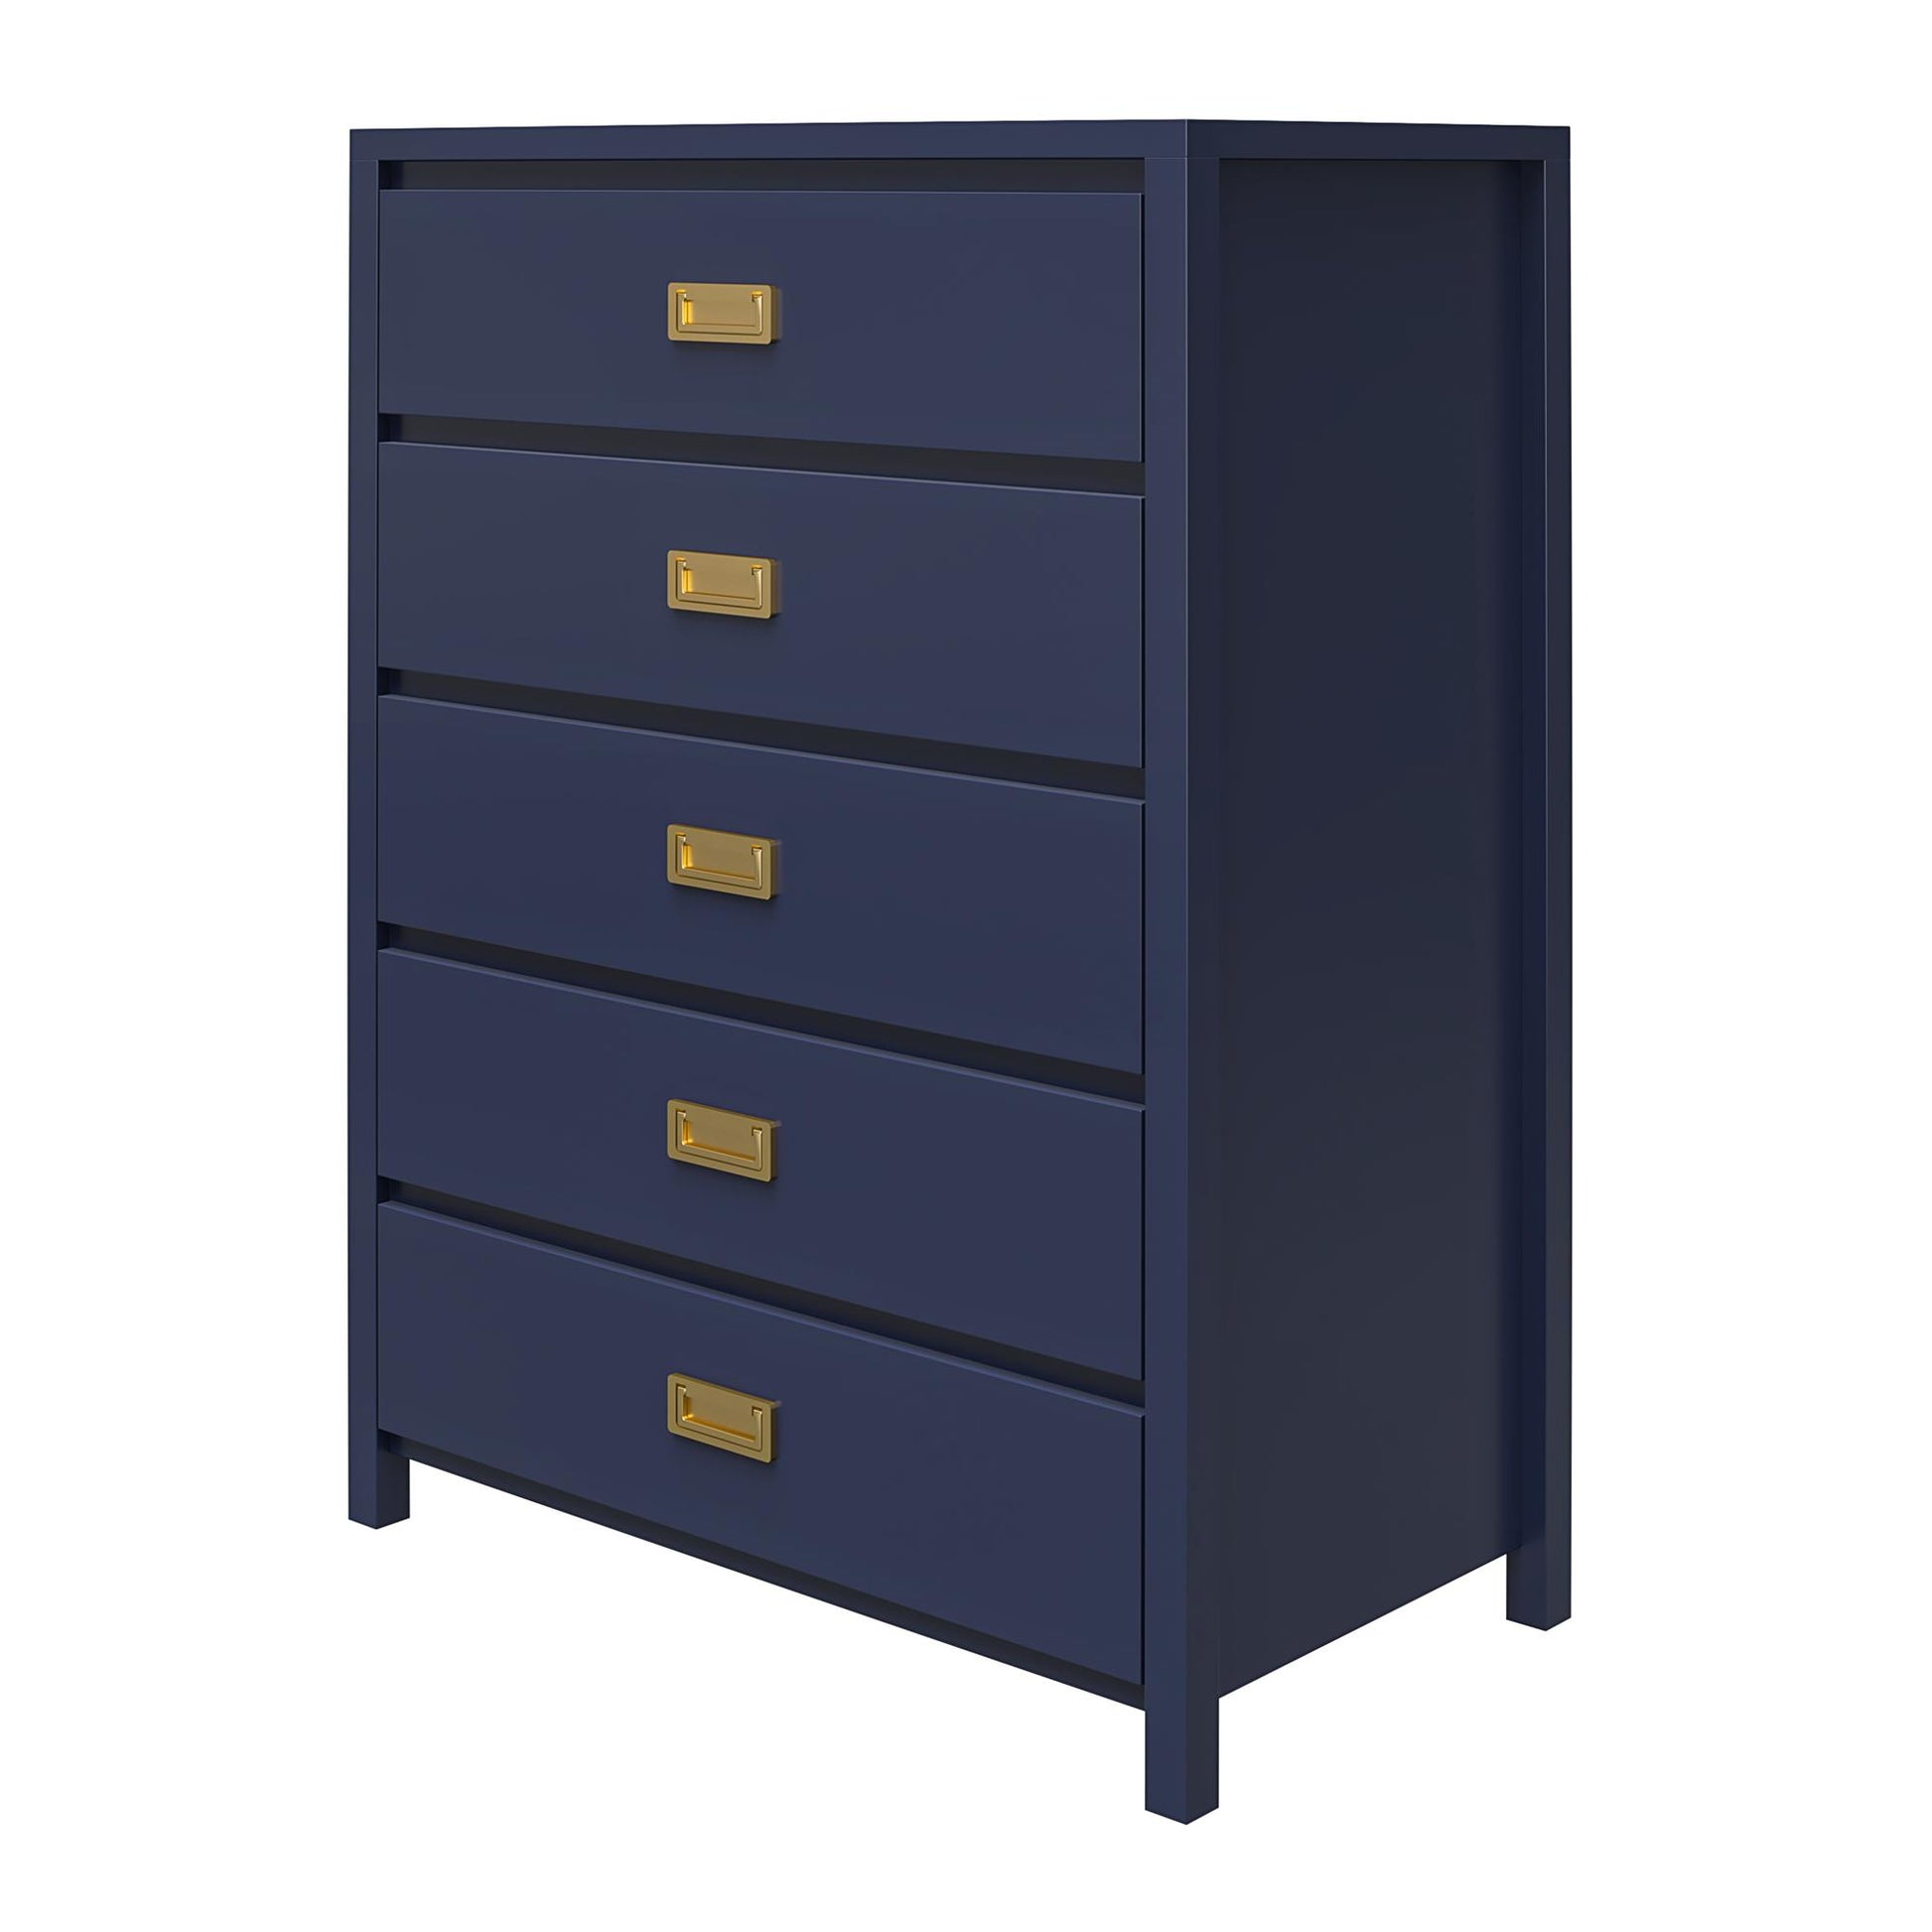 Monarch Hill Haven 5 Drawer Kids’ Dresser with Gold Drawer Pulls - Navy